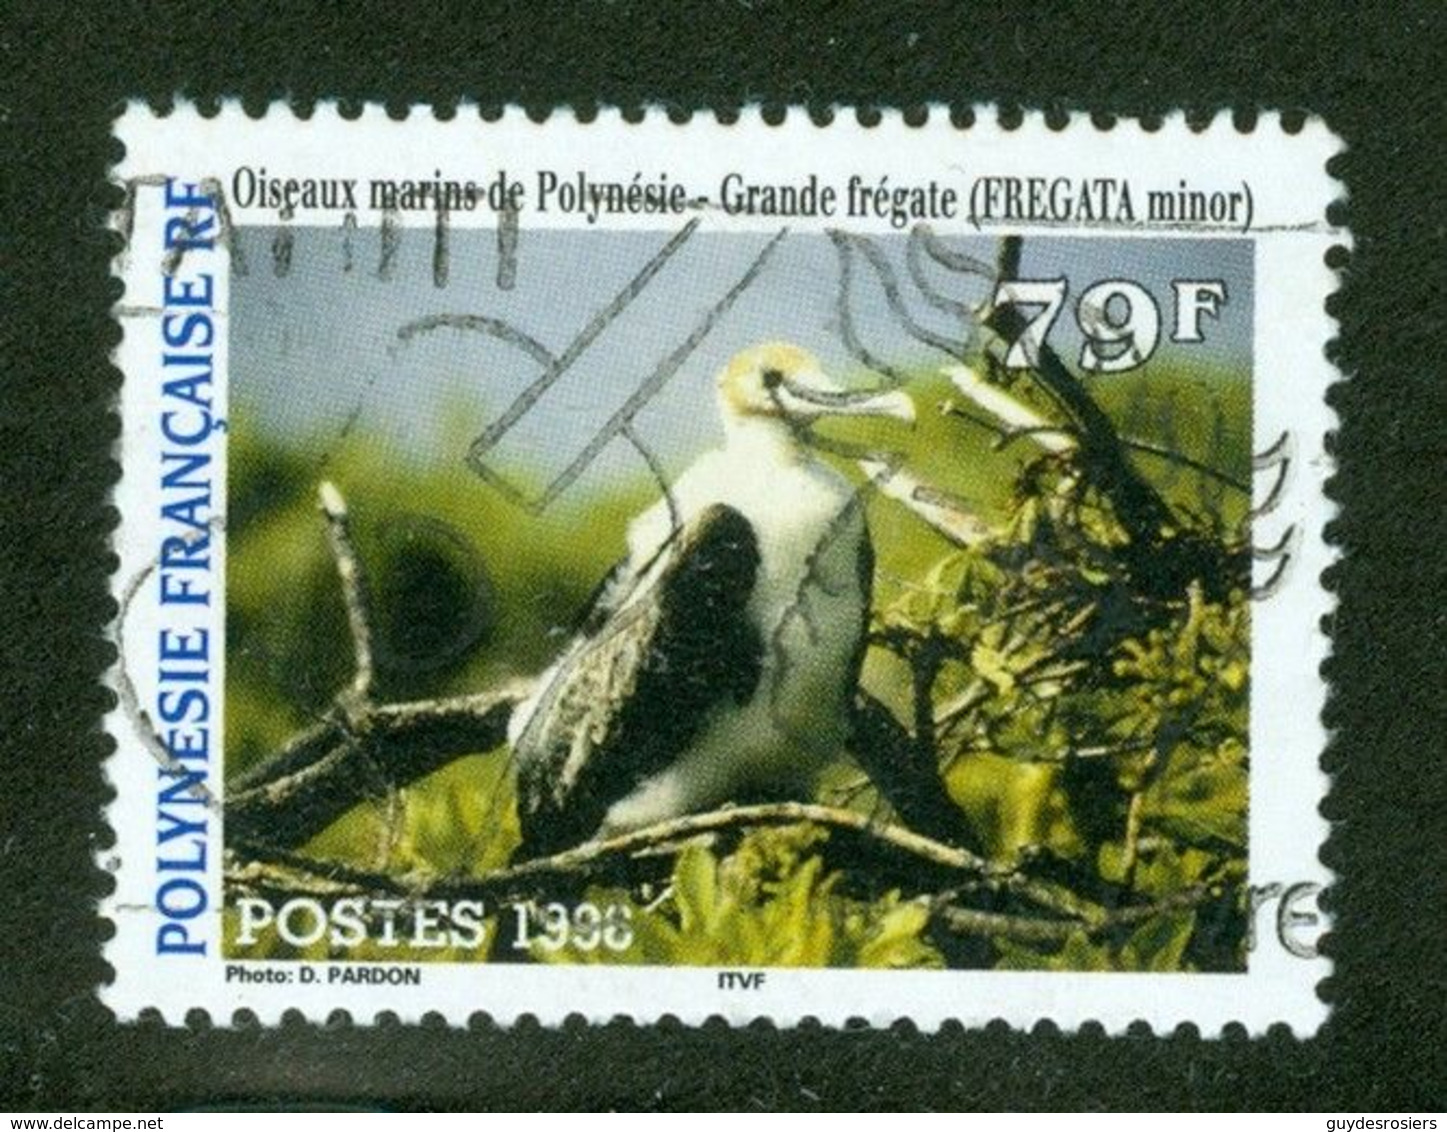 Bird / Oiseaux Grande Frégate; Polynésie Française / French Polynesia; Scott # 686; Usagé (3443) - Used Stamps